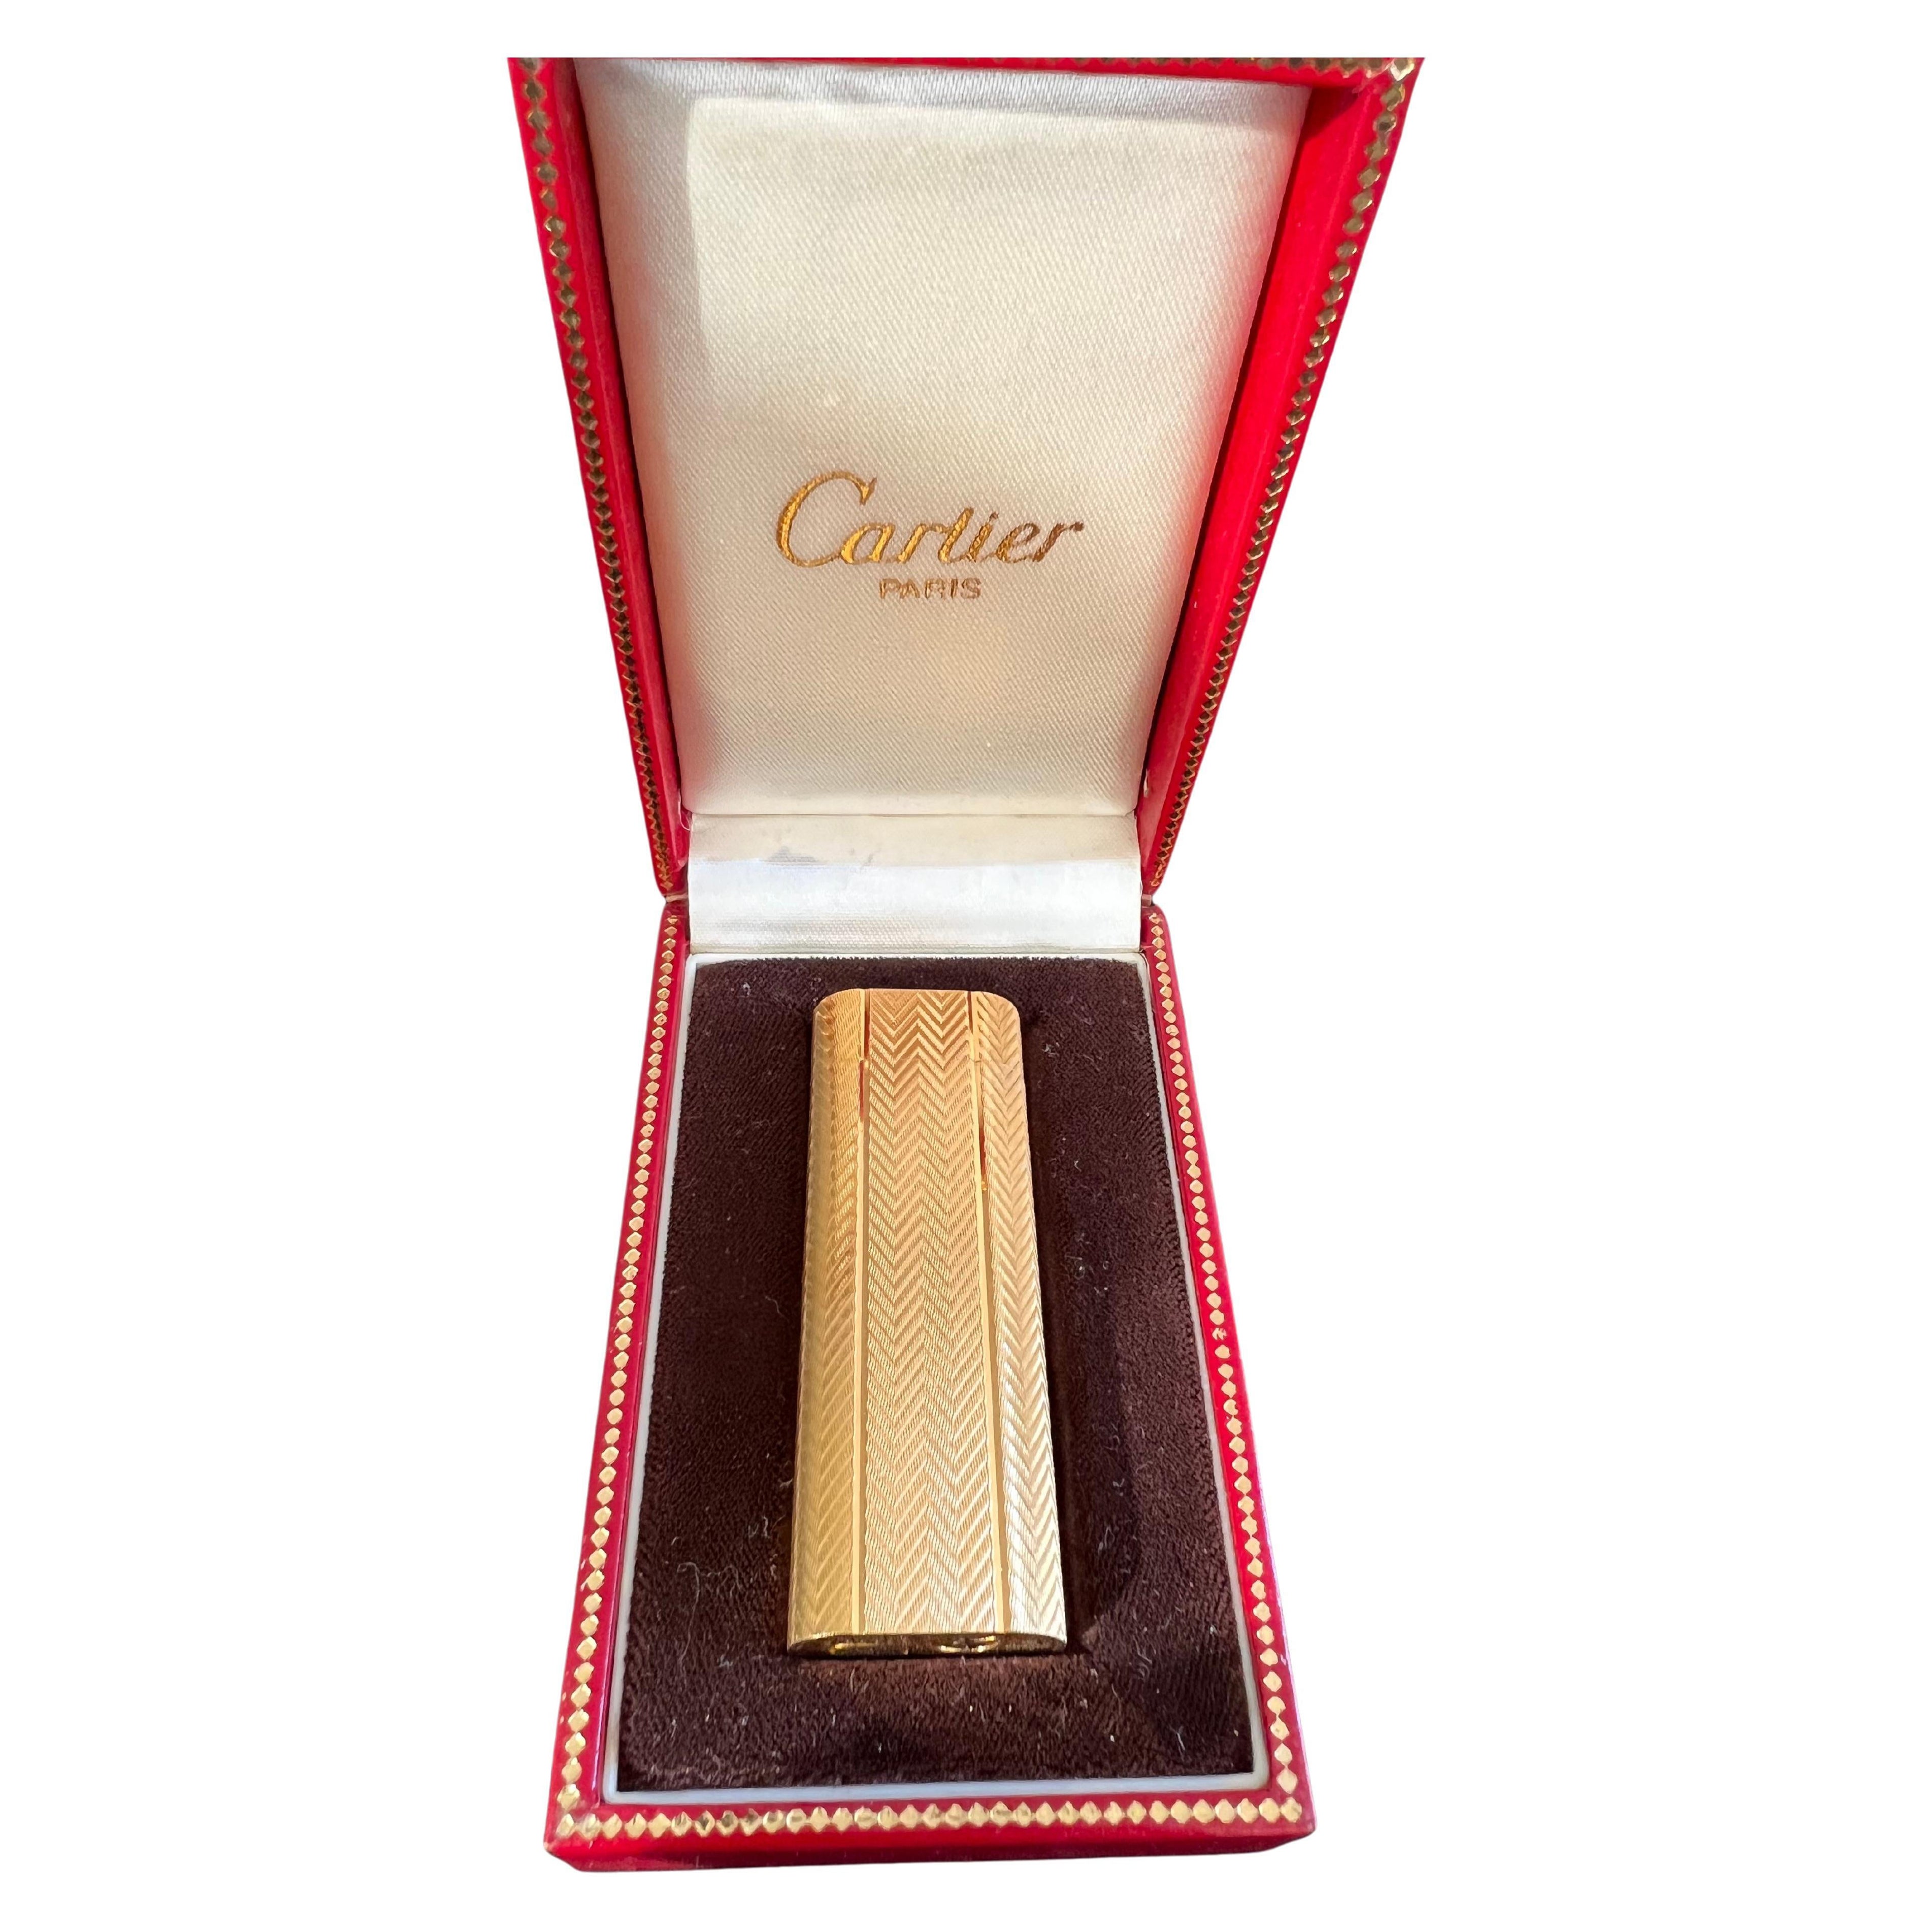 A Les Must De Cartier Paris 18k gold plated lighter